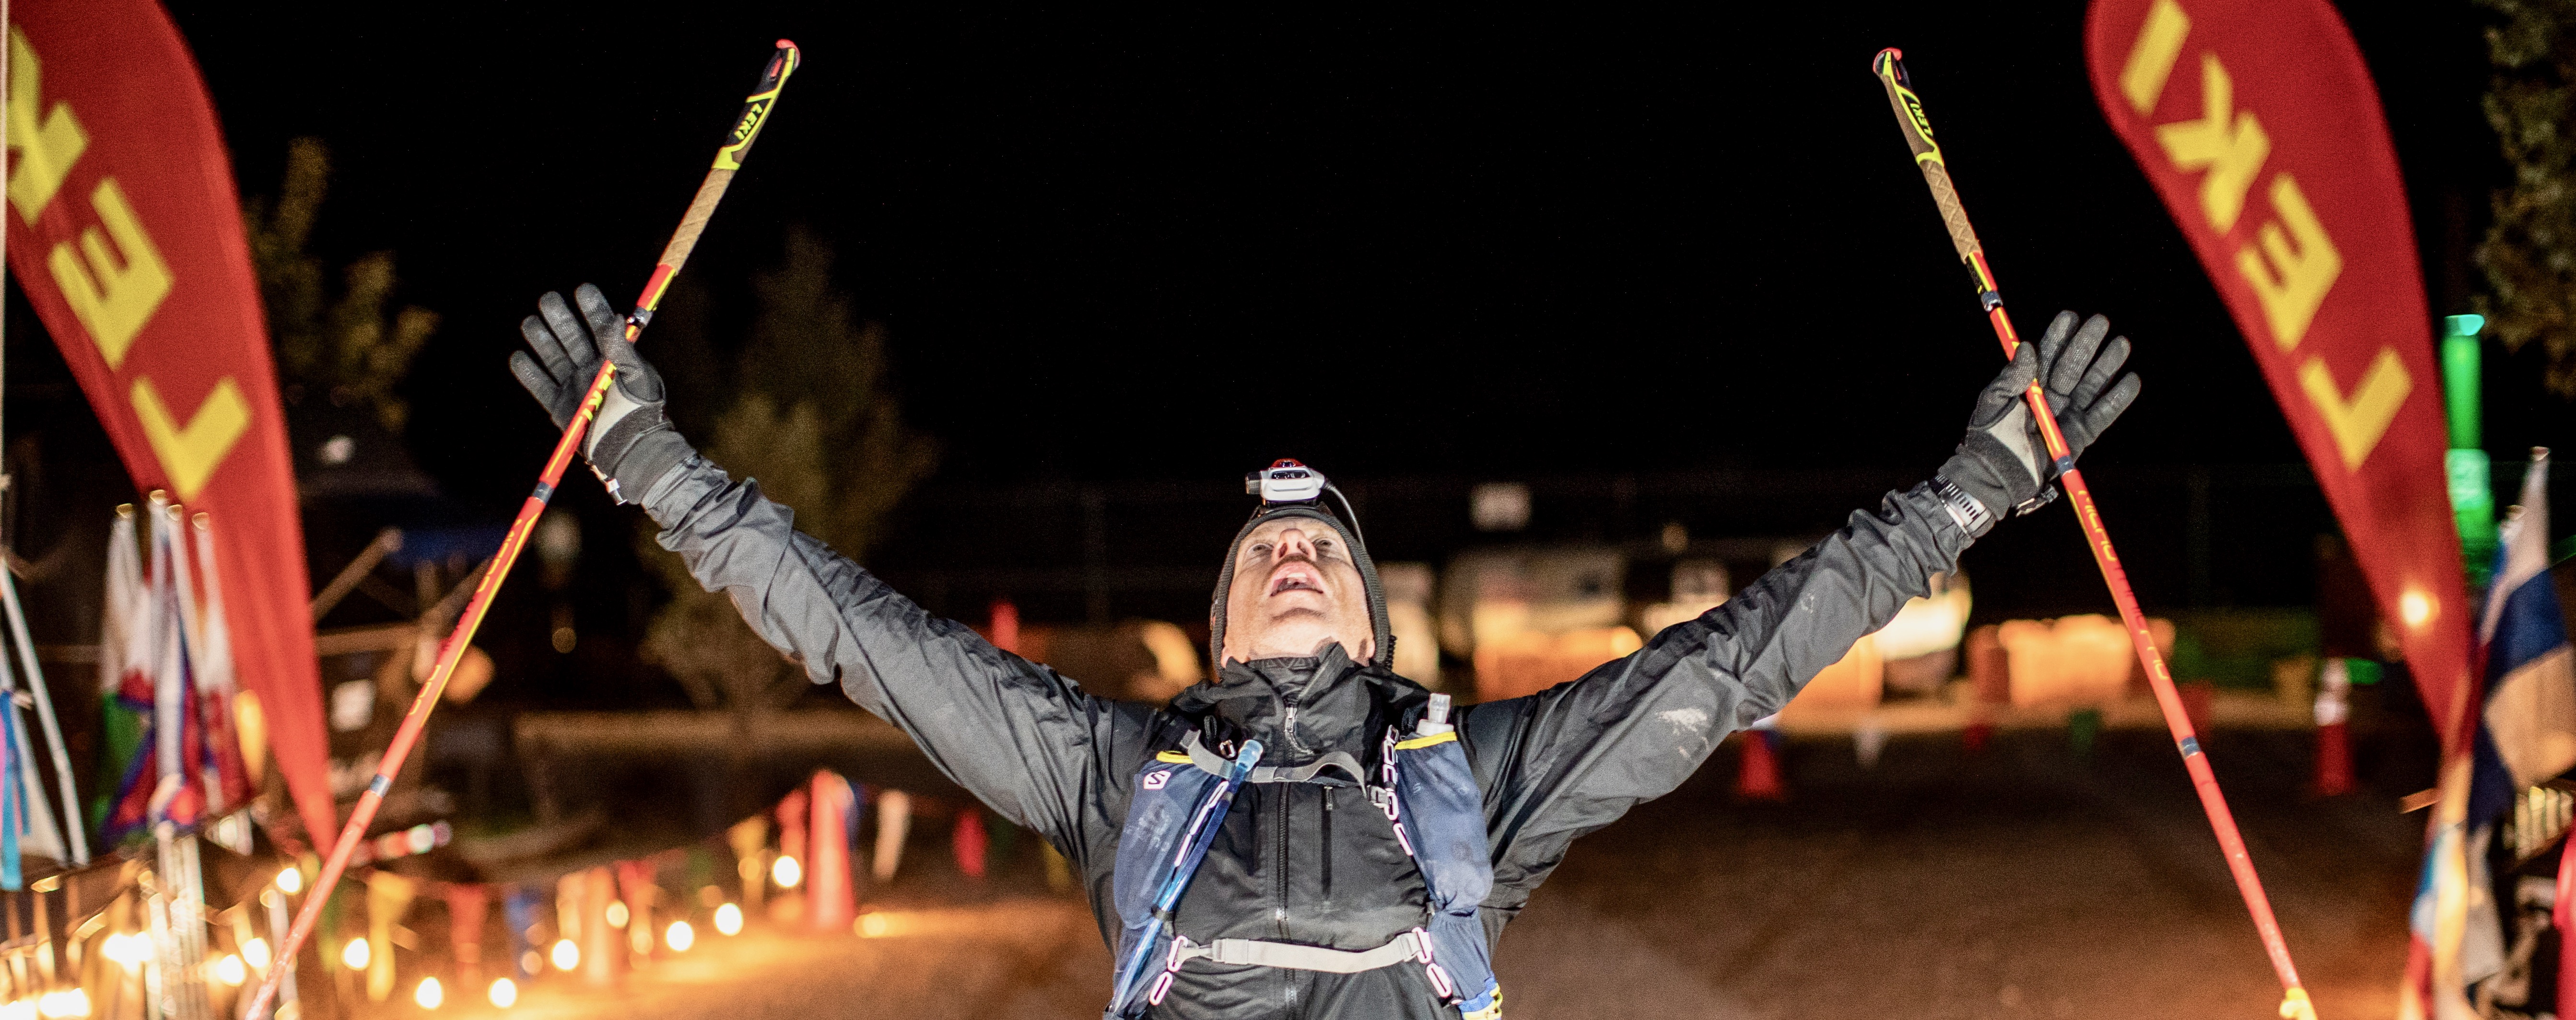 Adam Scully-Power finishing Moab 240 Ultramarathon